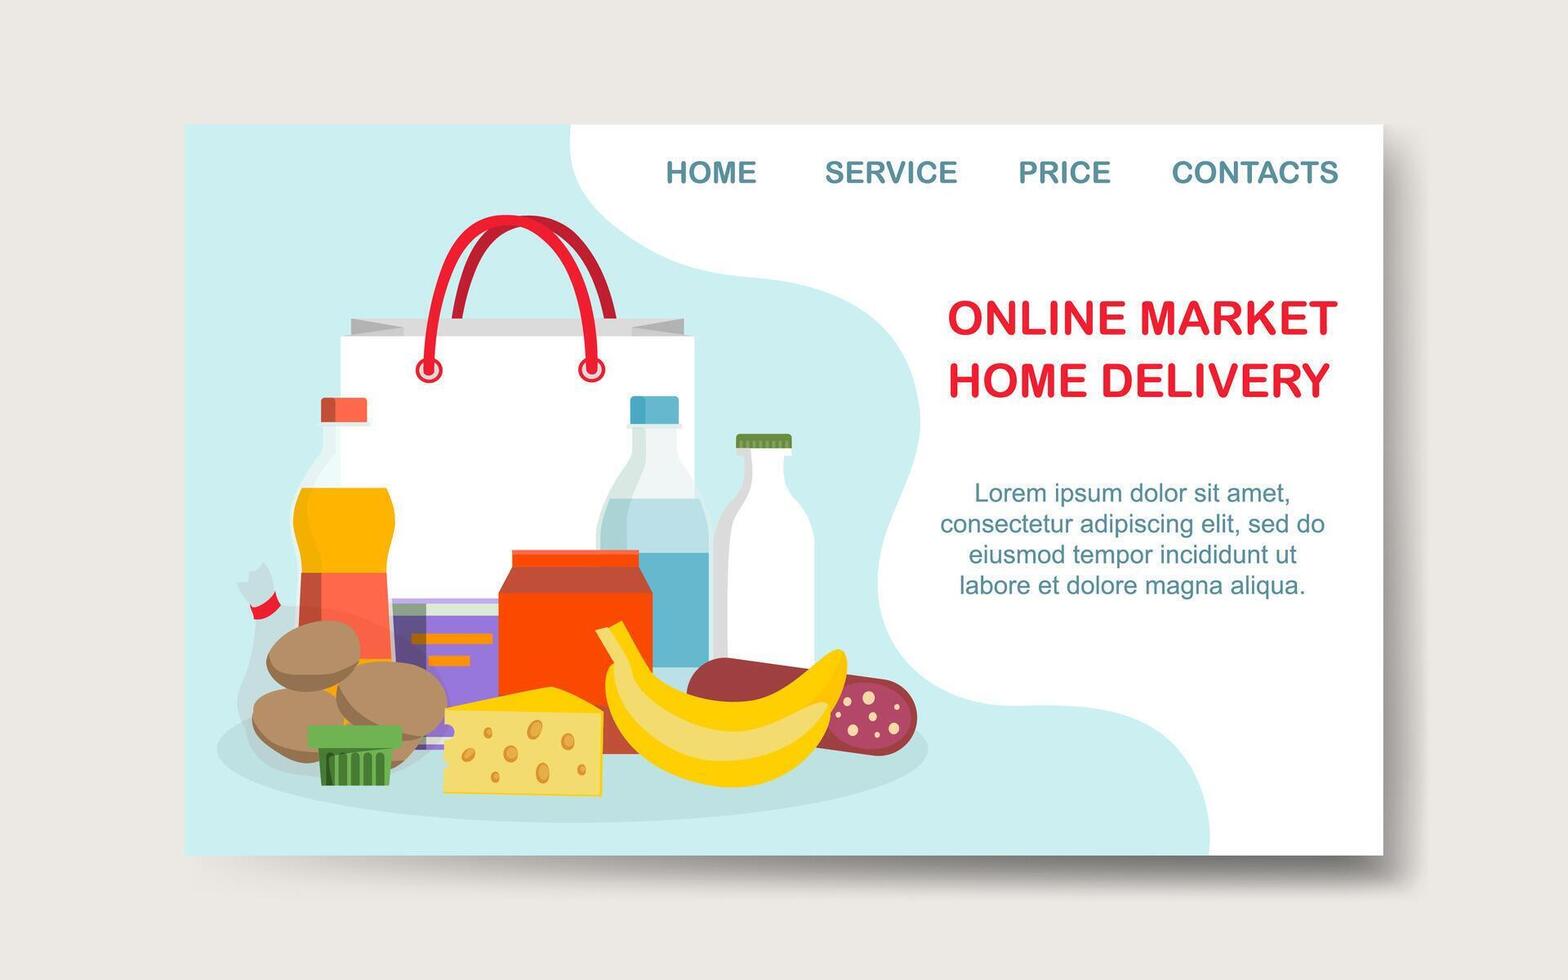 Web page design template for Grocery store, Online Market, Home delivery. Vector illustration for poster, banner, website development.